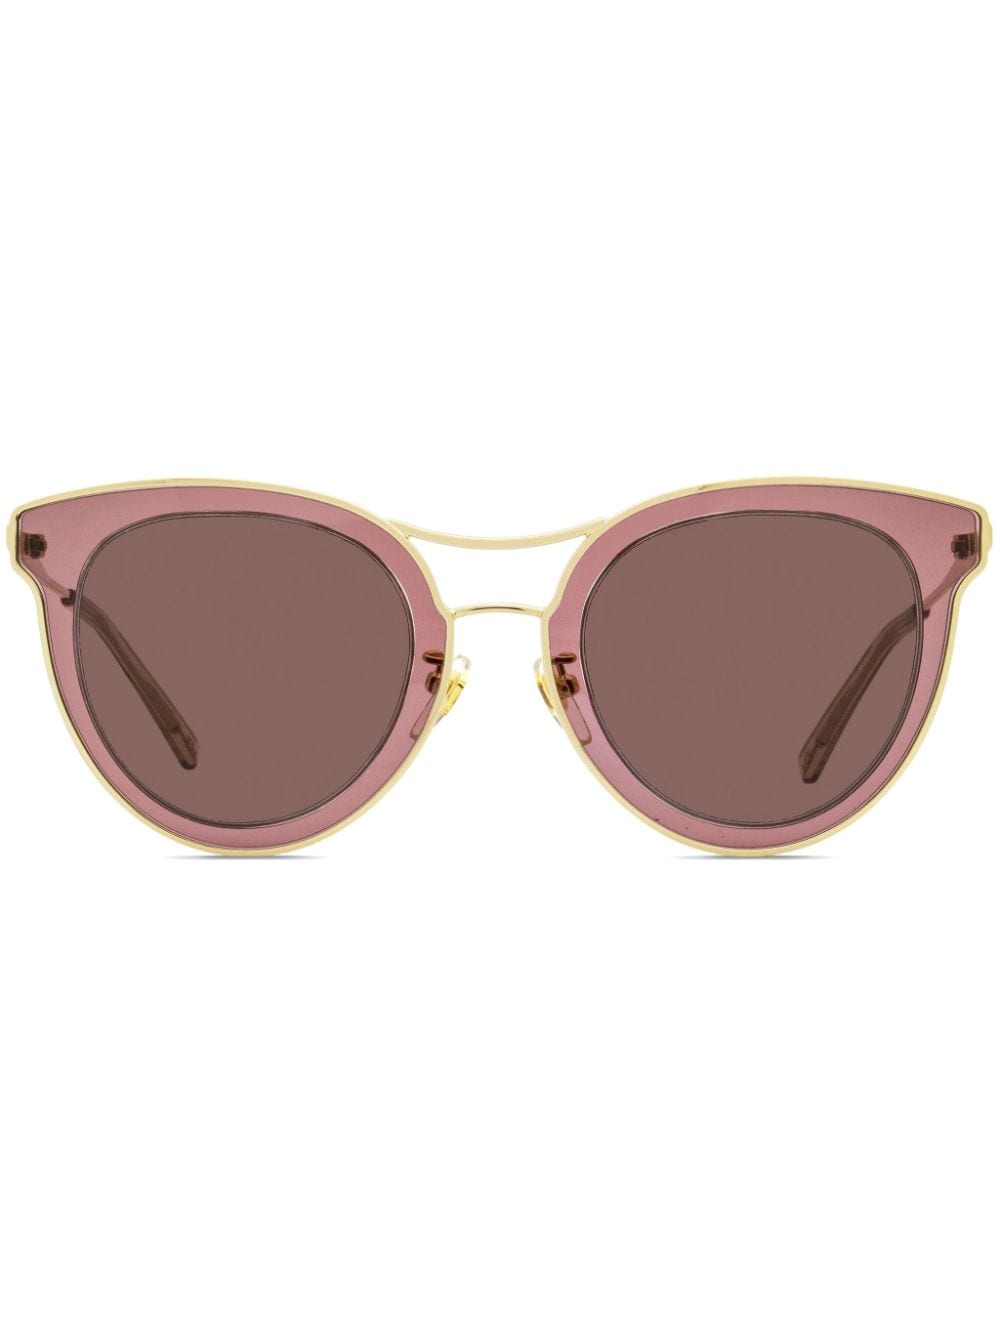 MCM 139 oval sunglasses - Gold von MCM